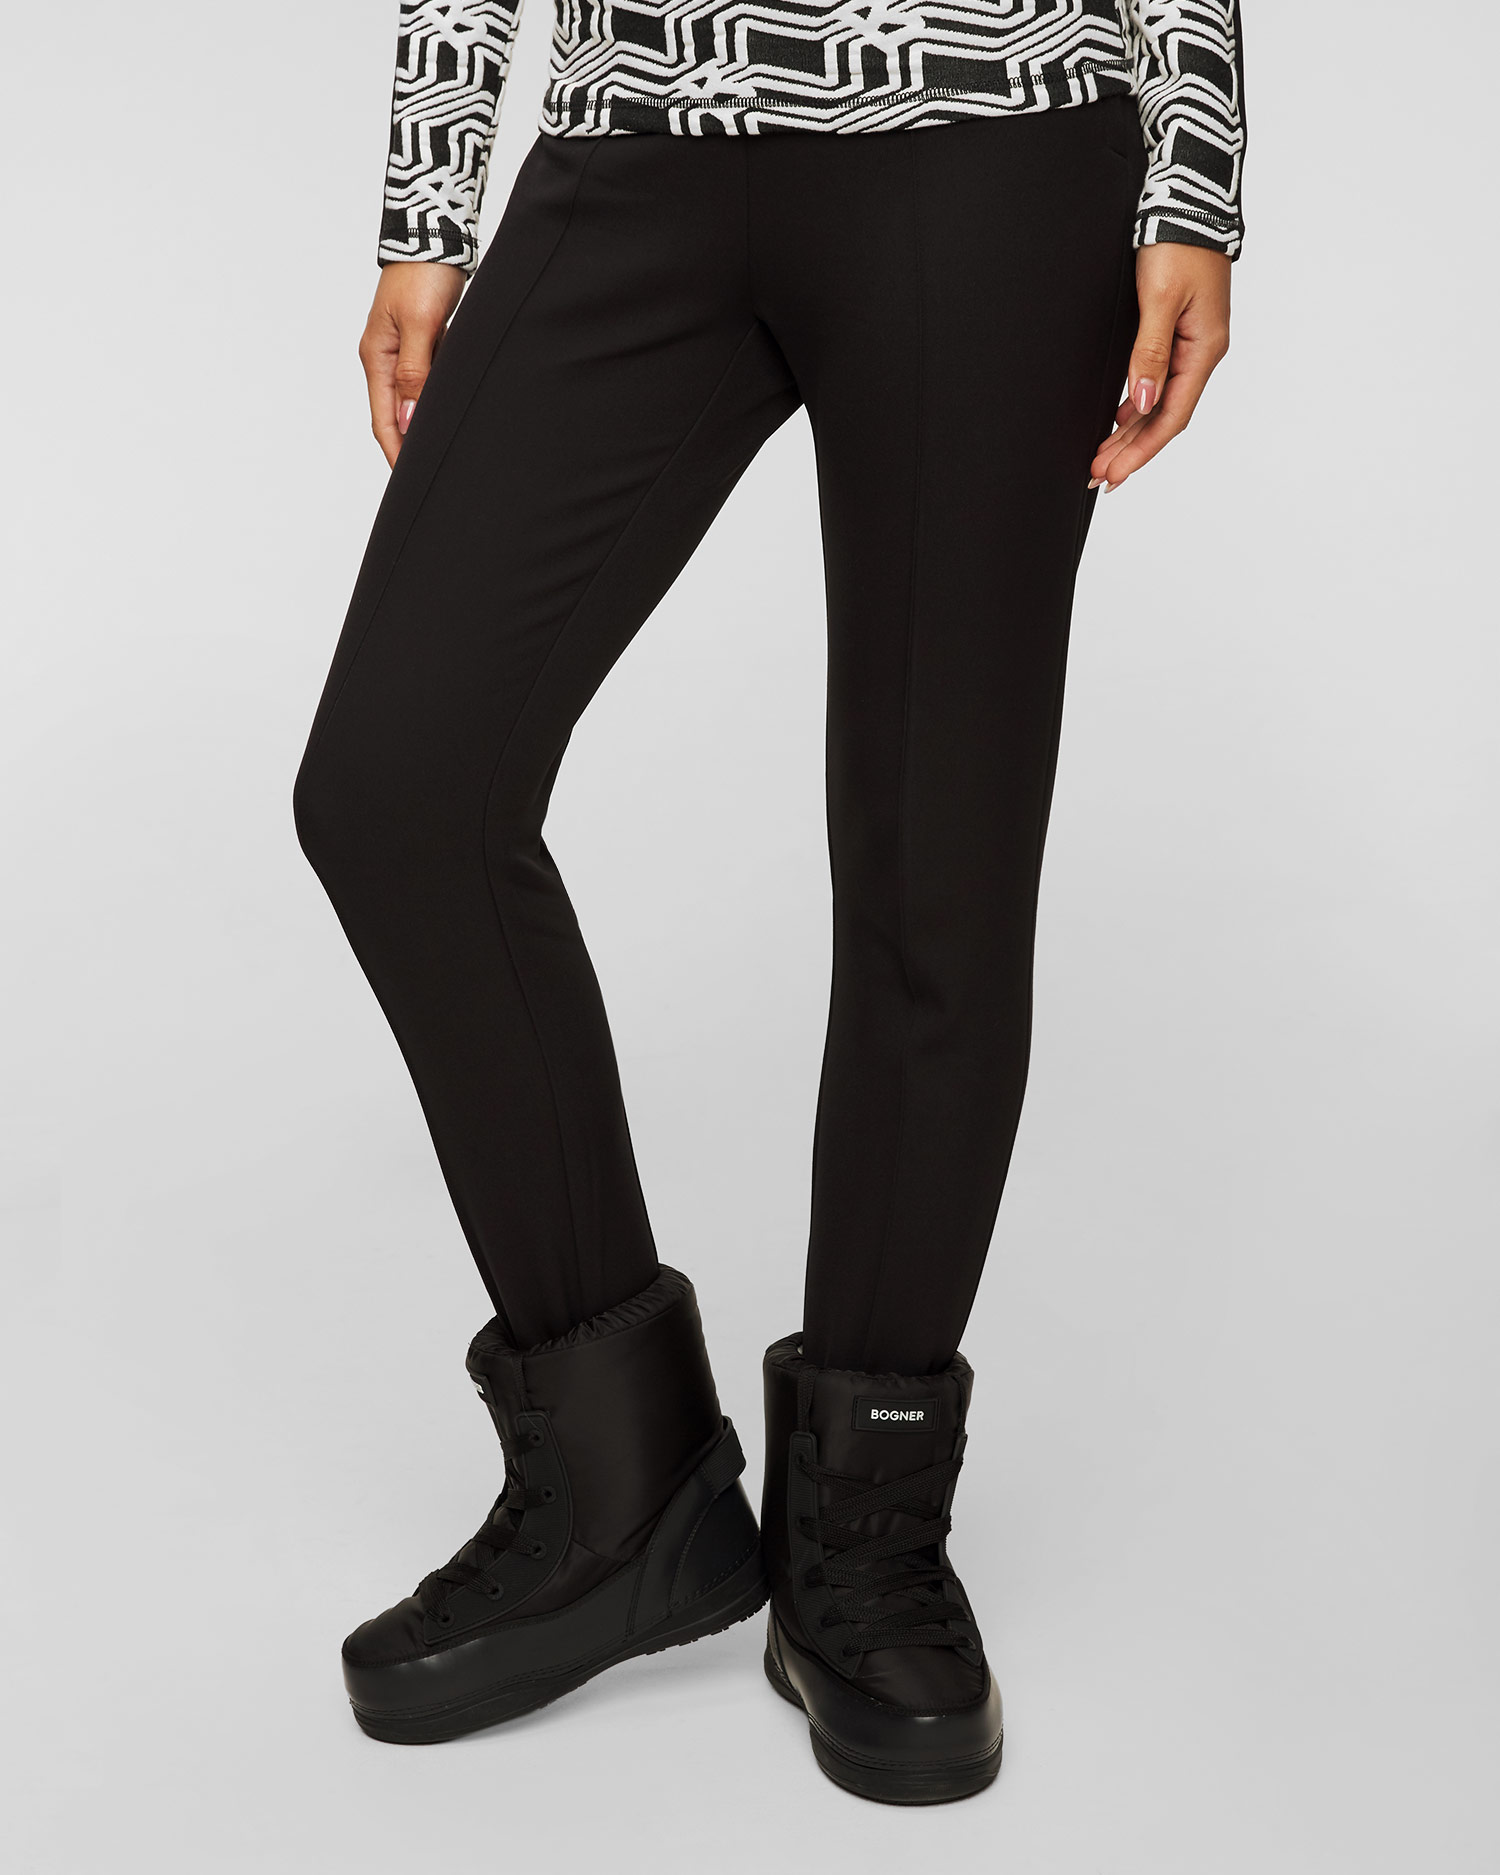 Black women's stirrup trousers BOGNER Elaine 11717985-26